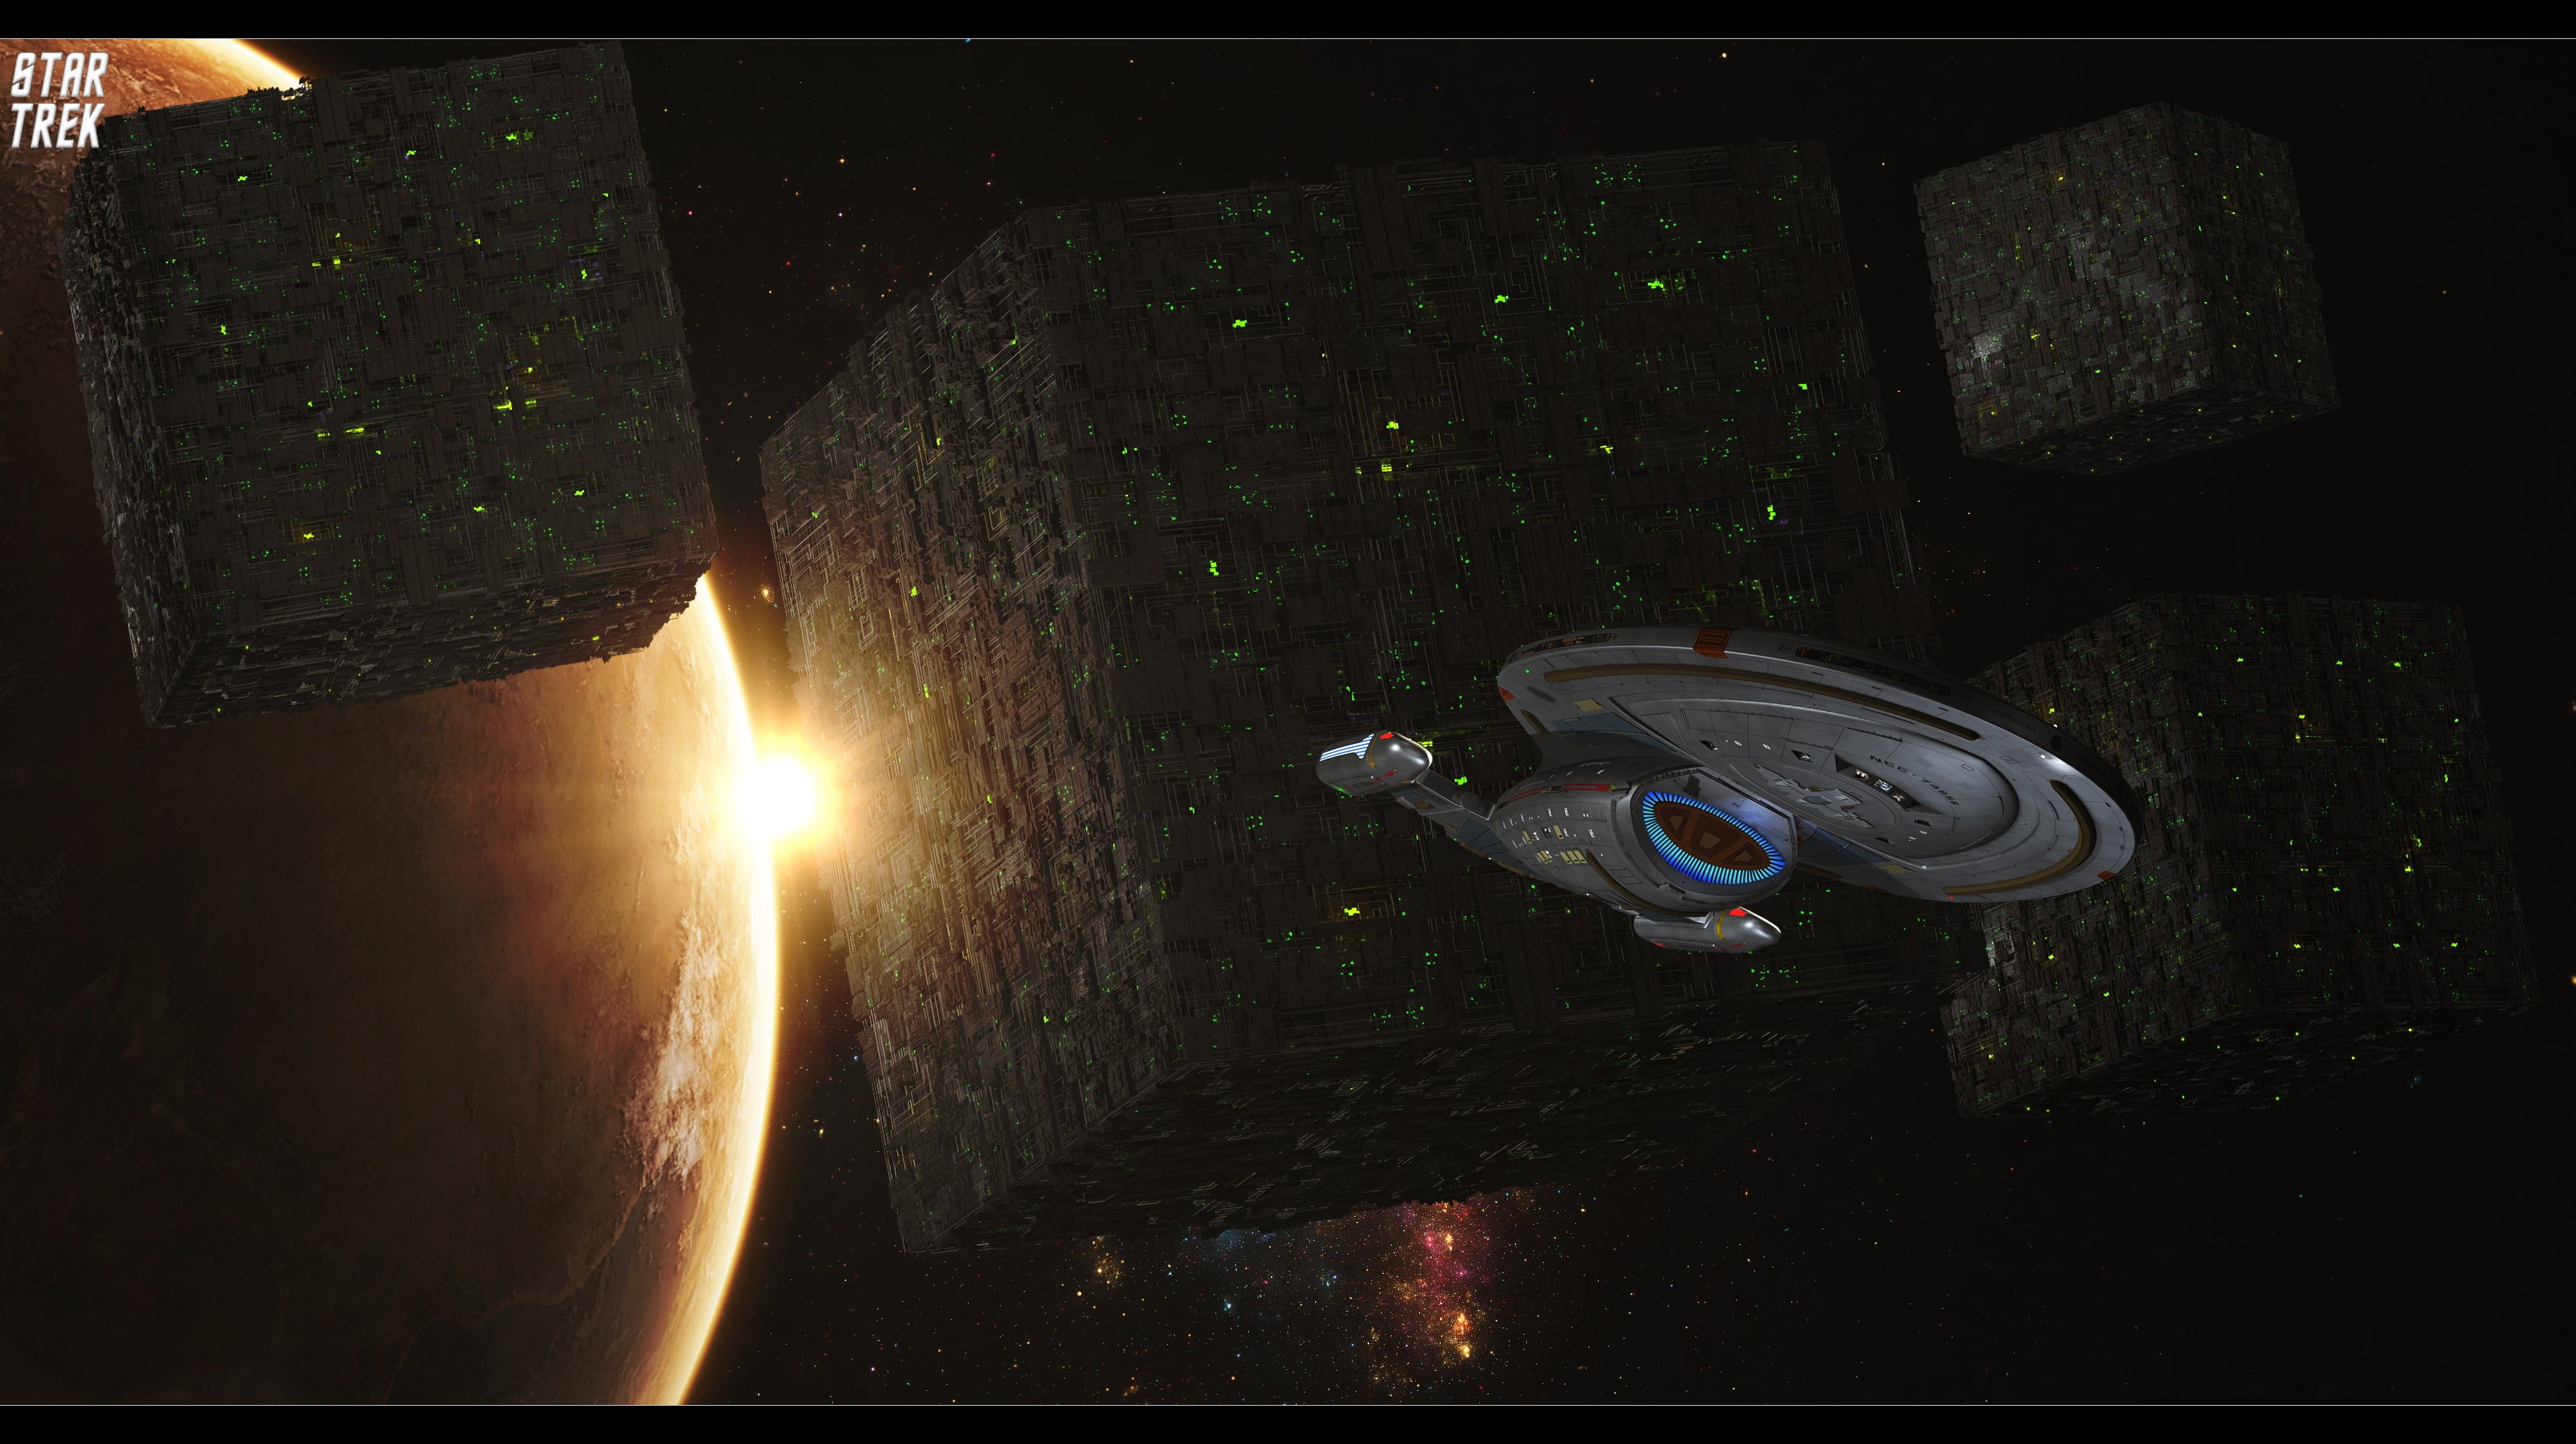 Star Trek digital wallpaper, Star Trek, USS Voyager, Borg, space